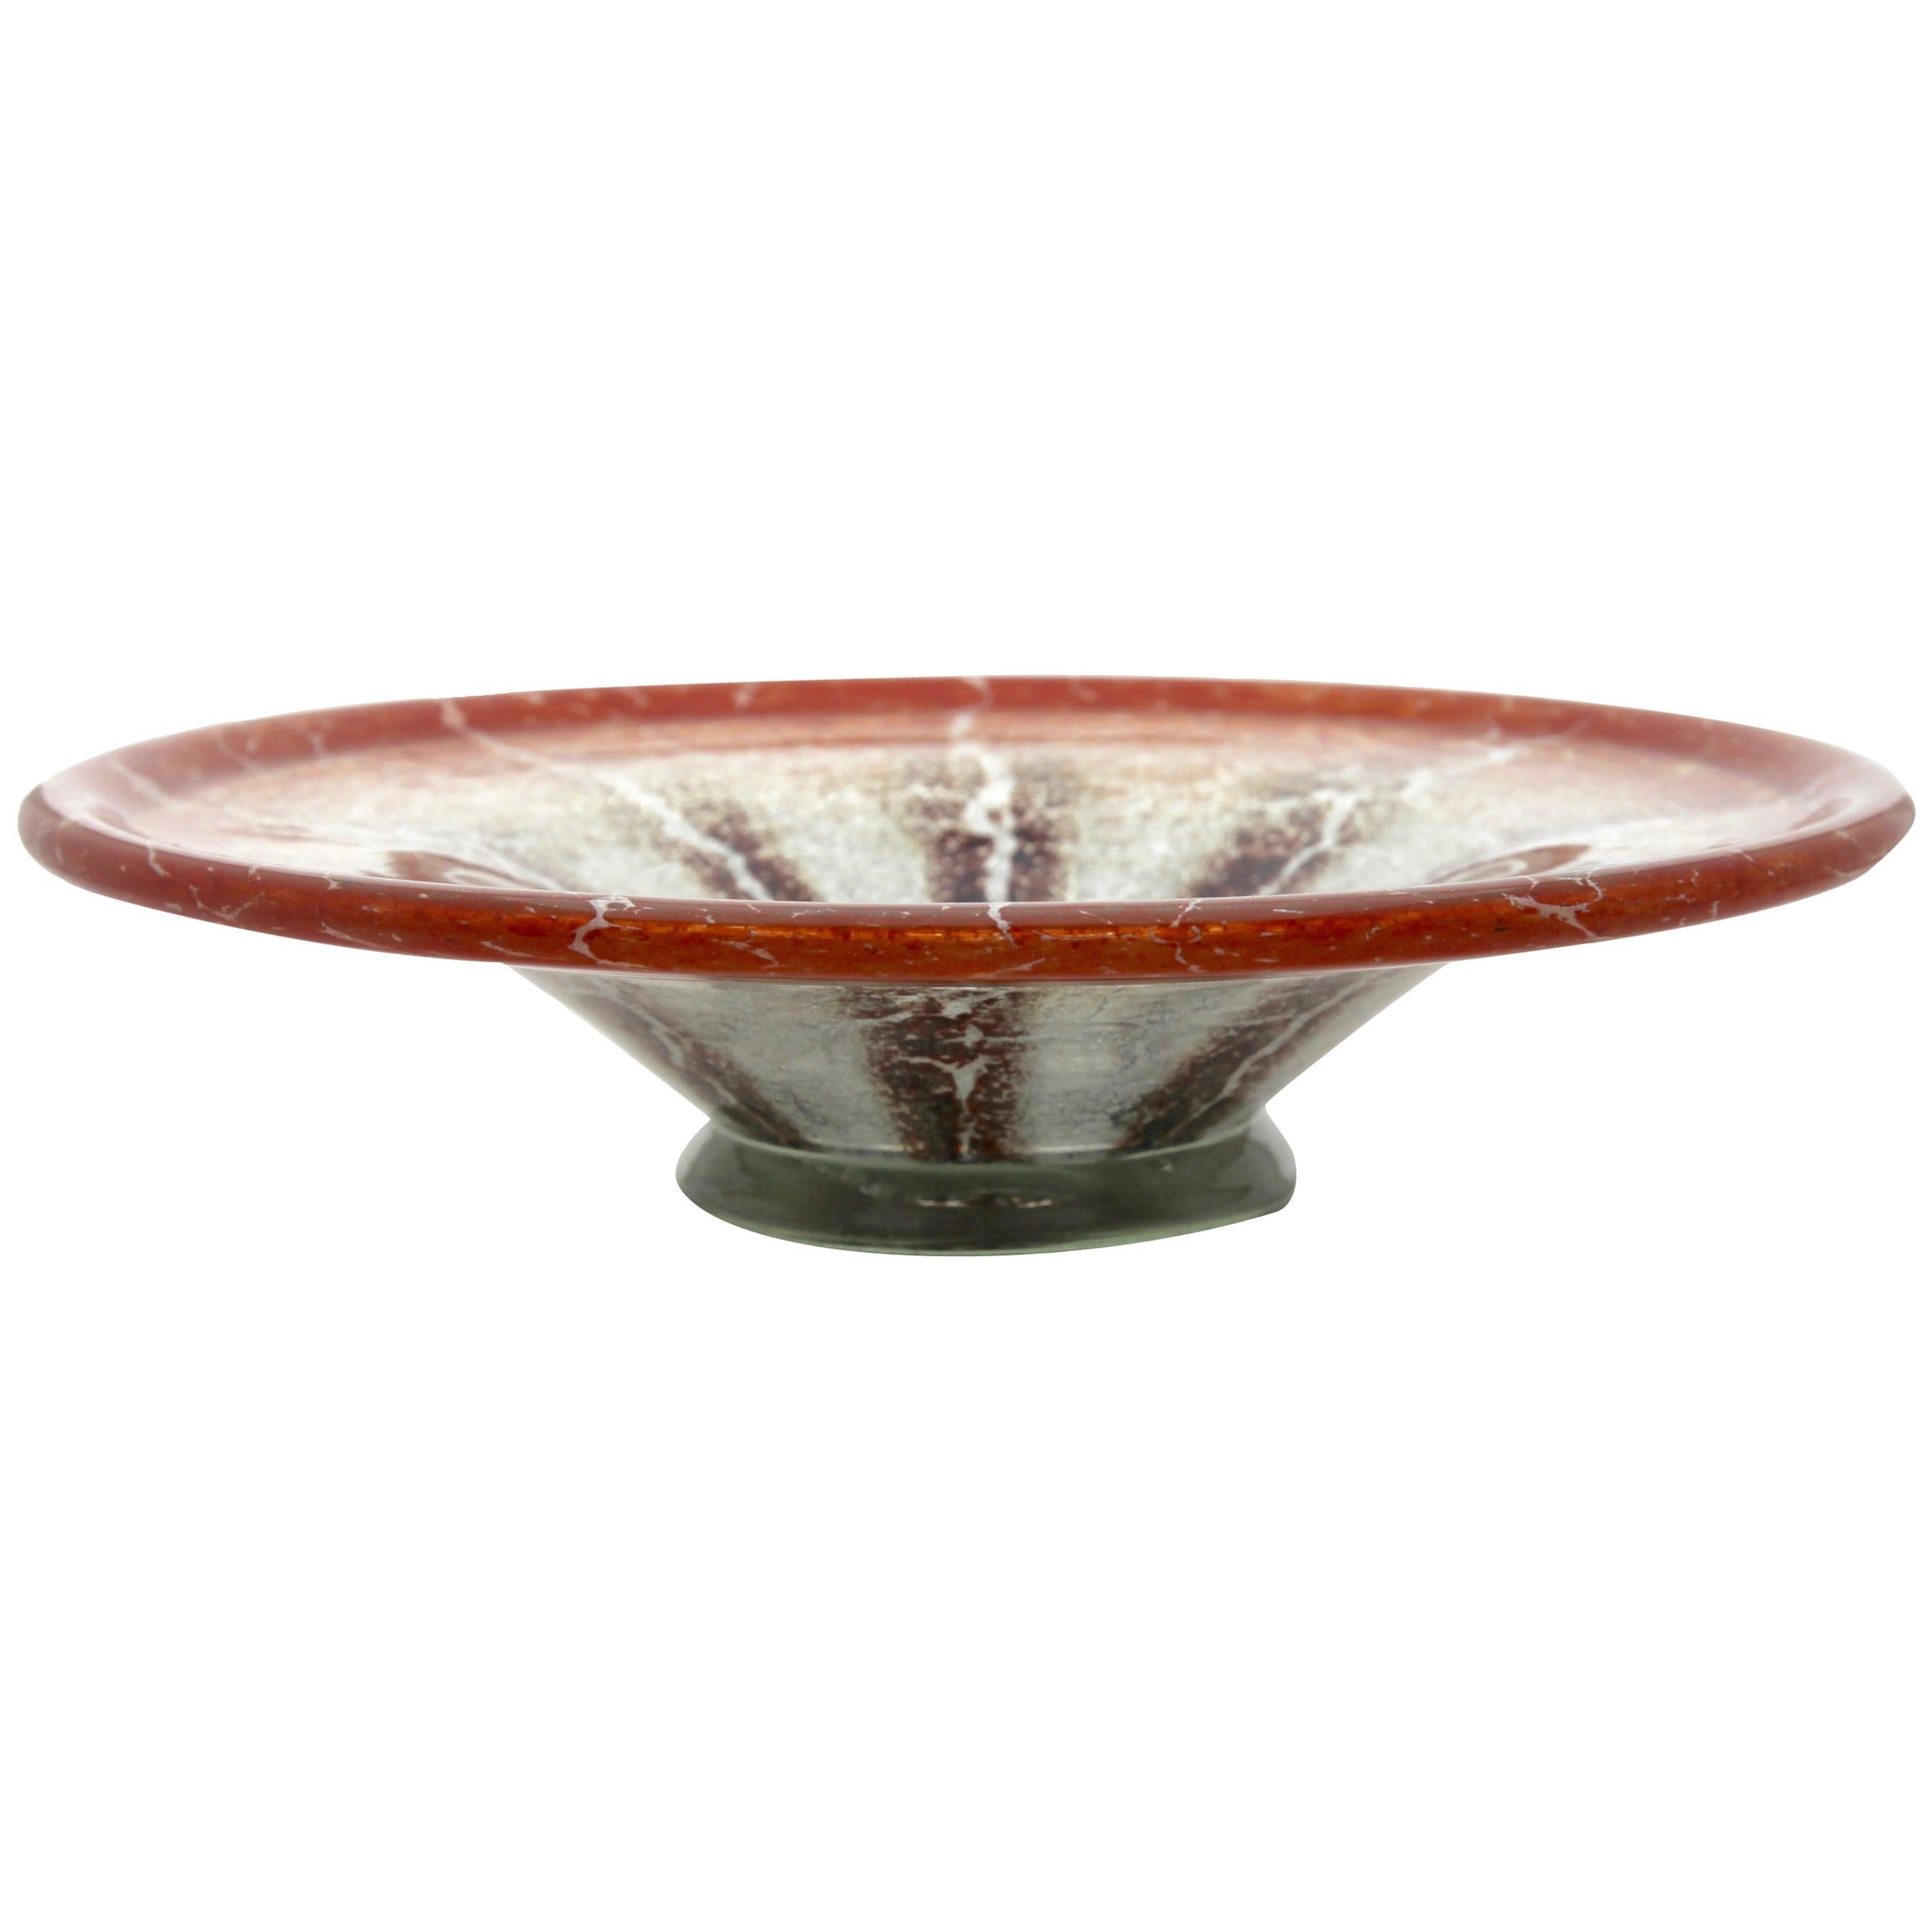 'Ikora' Art Glass Bowl, Produced, by WMF in Germany, 1930s by Karl Wiedmann